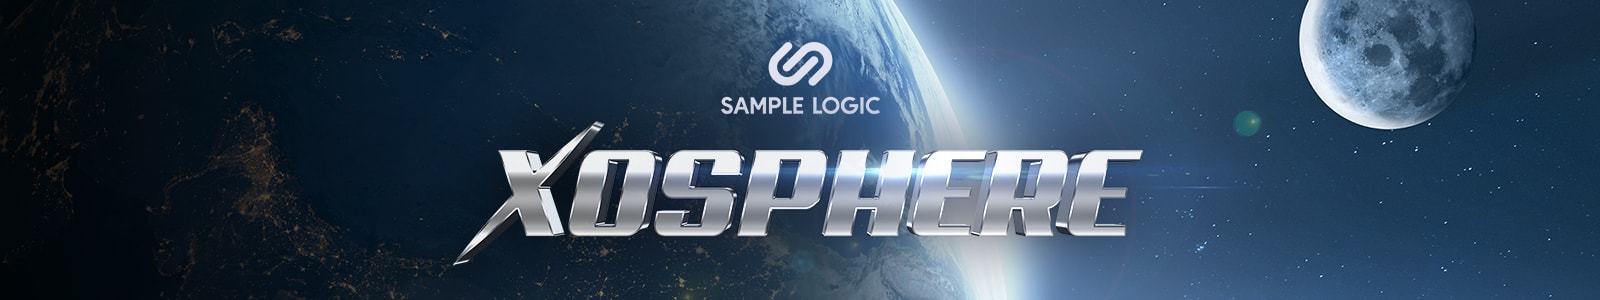 xosphere by sample logic